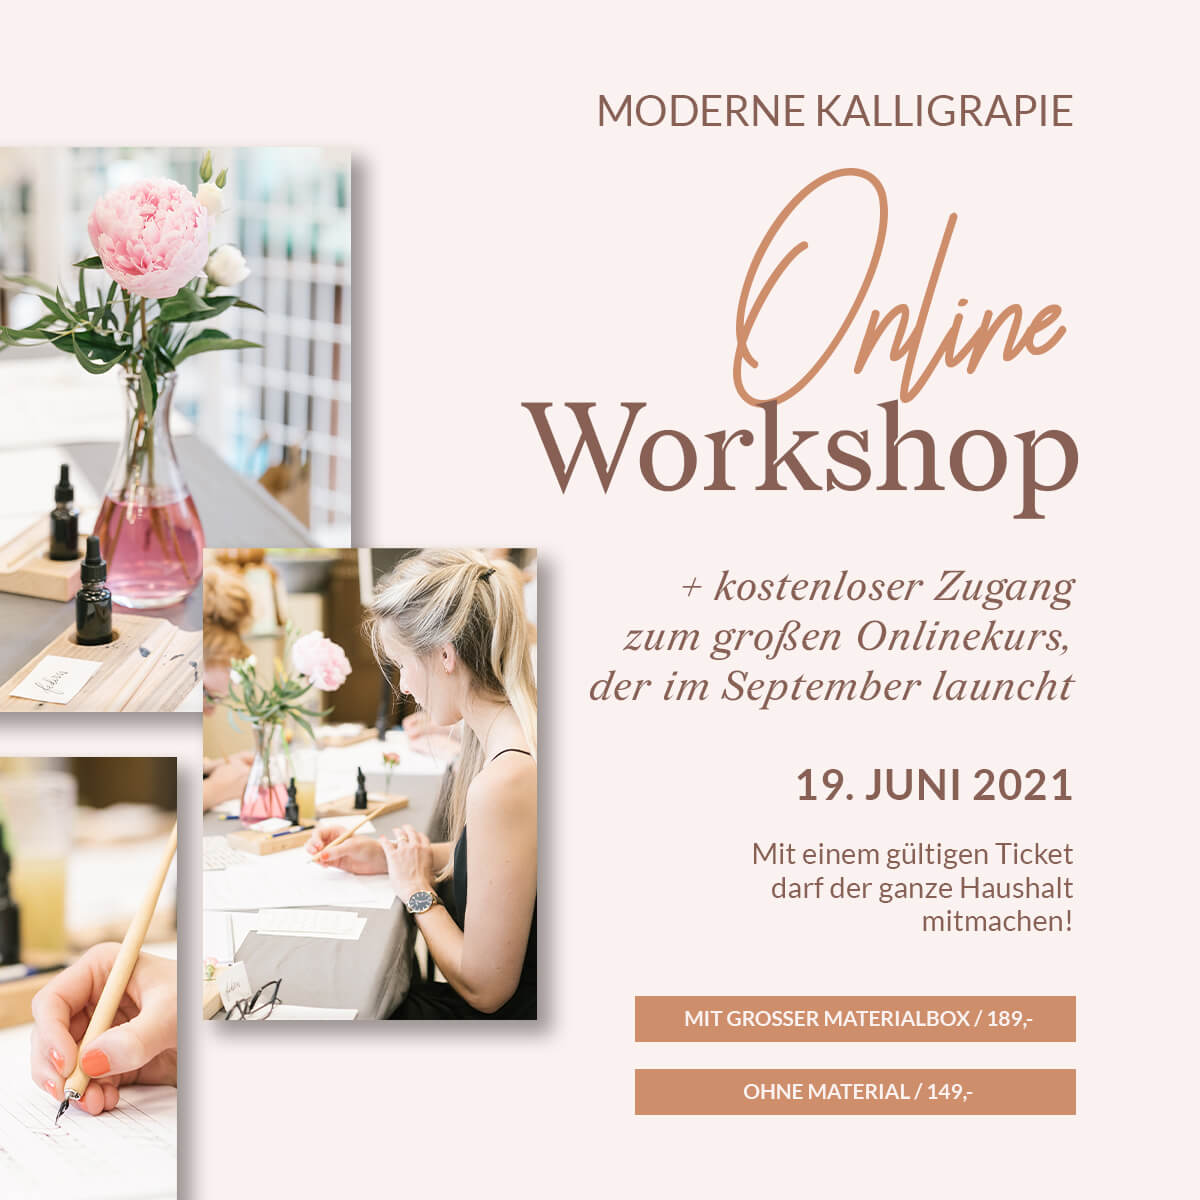 Moderne Kalligraphie Workshop Onlinekurs Zoom Hamburg Bremen